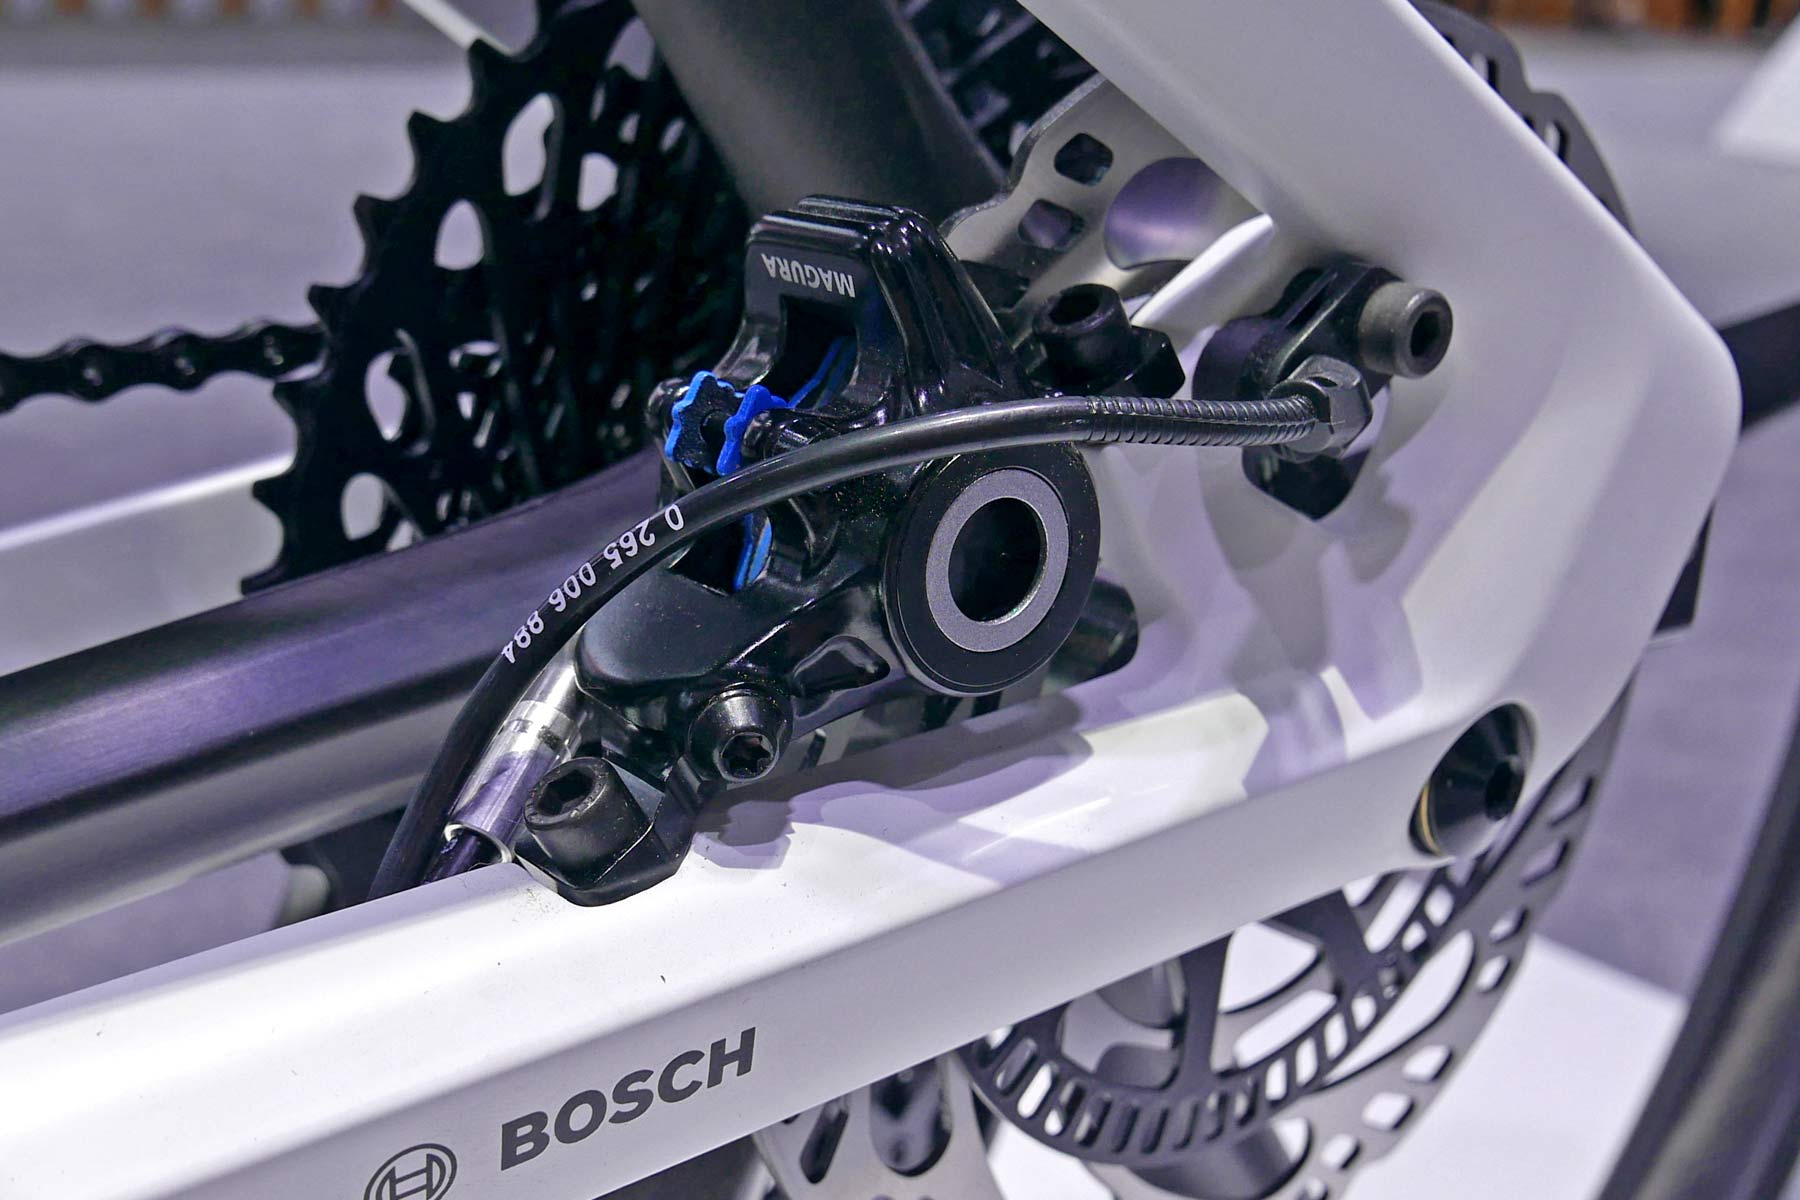 Bosch eBike ABS prototype e-bike with integrated anti-lock braking, brake slip sensor